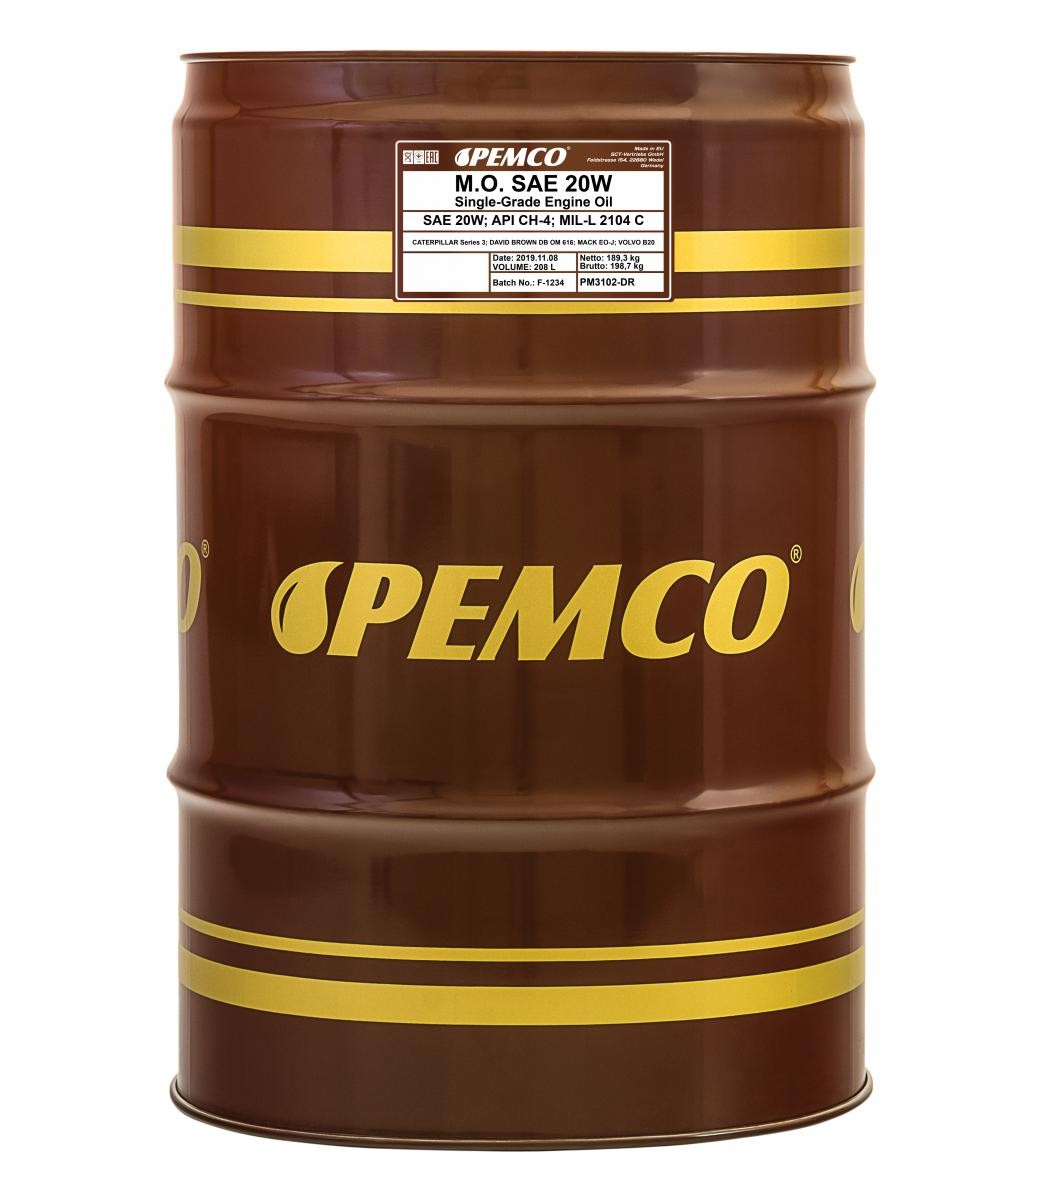 Engine oil MIL-L-2104 C PEMCO - PM3102-DR M.O. SAE 20W